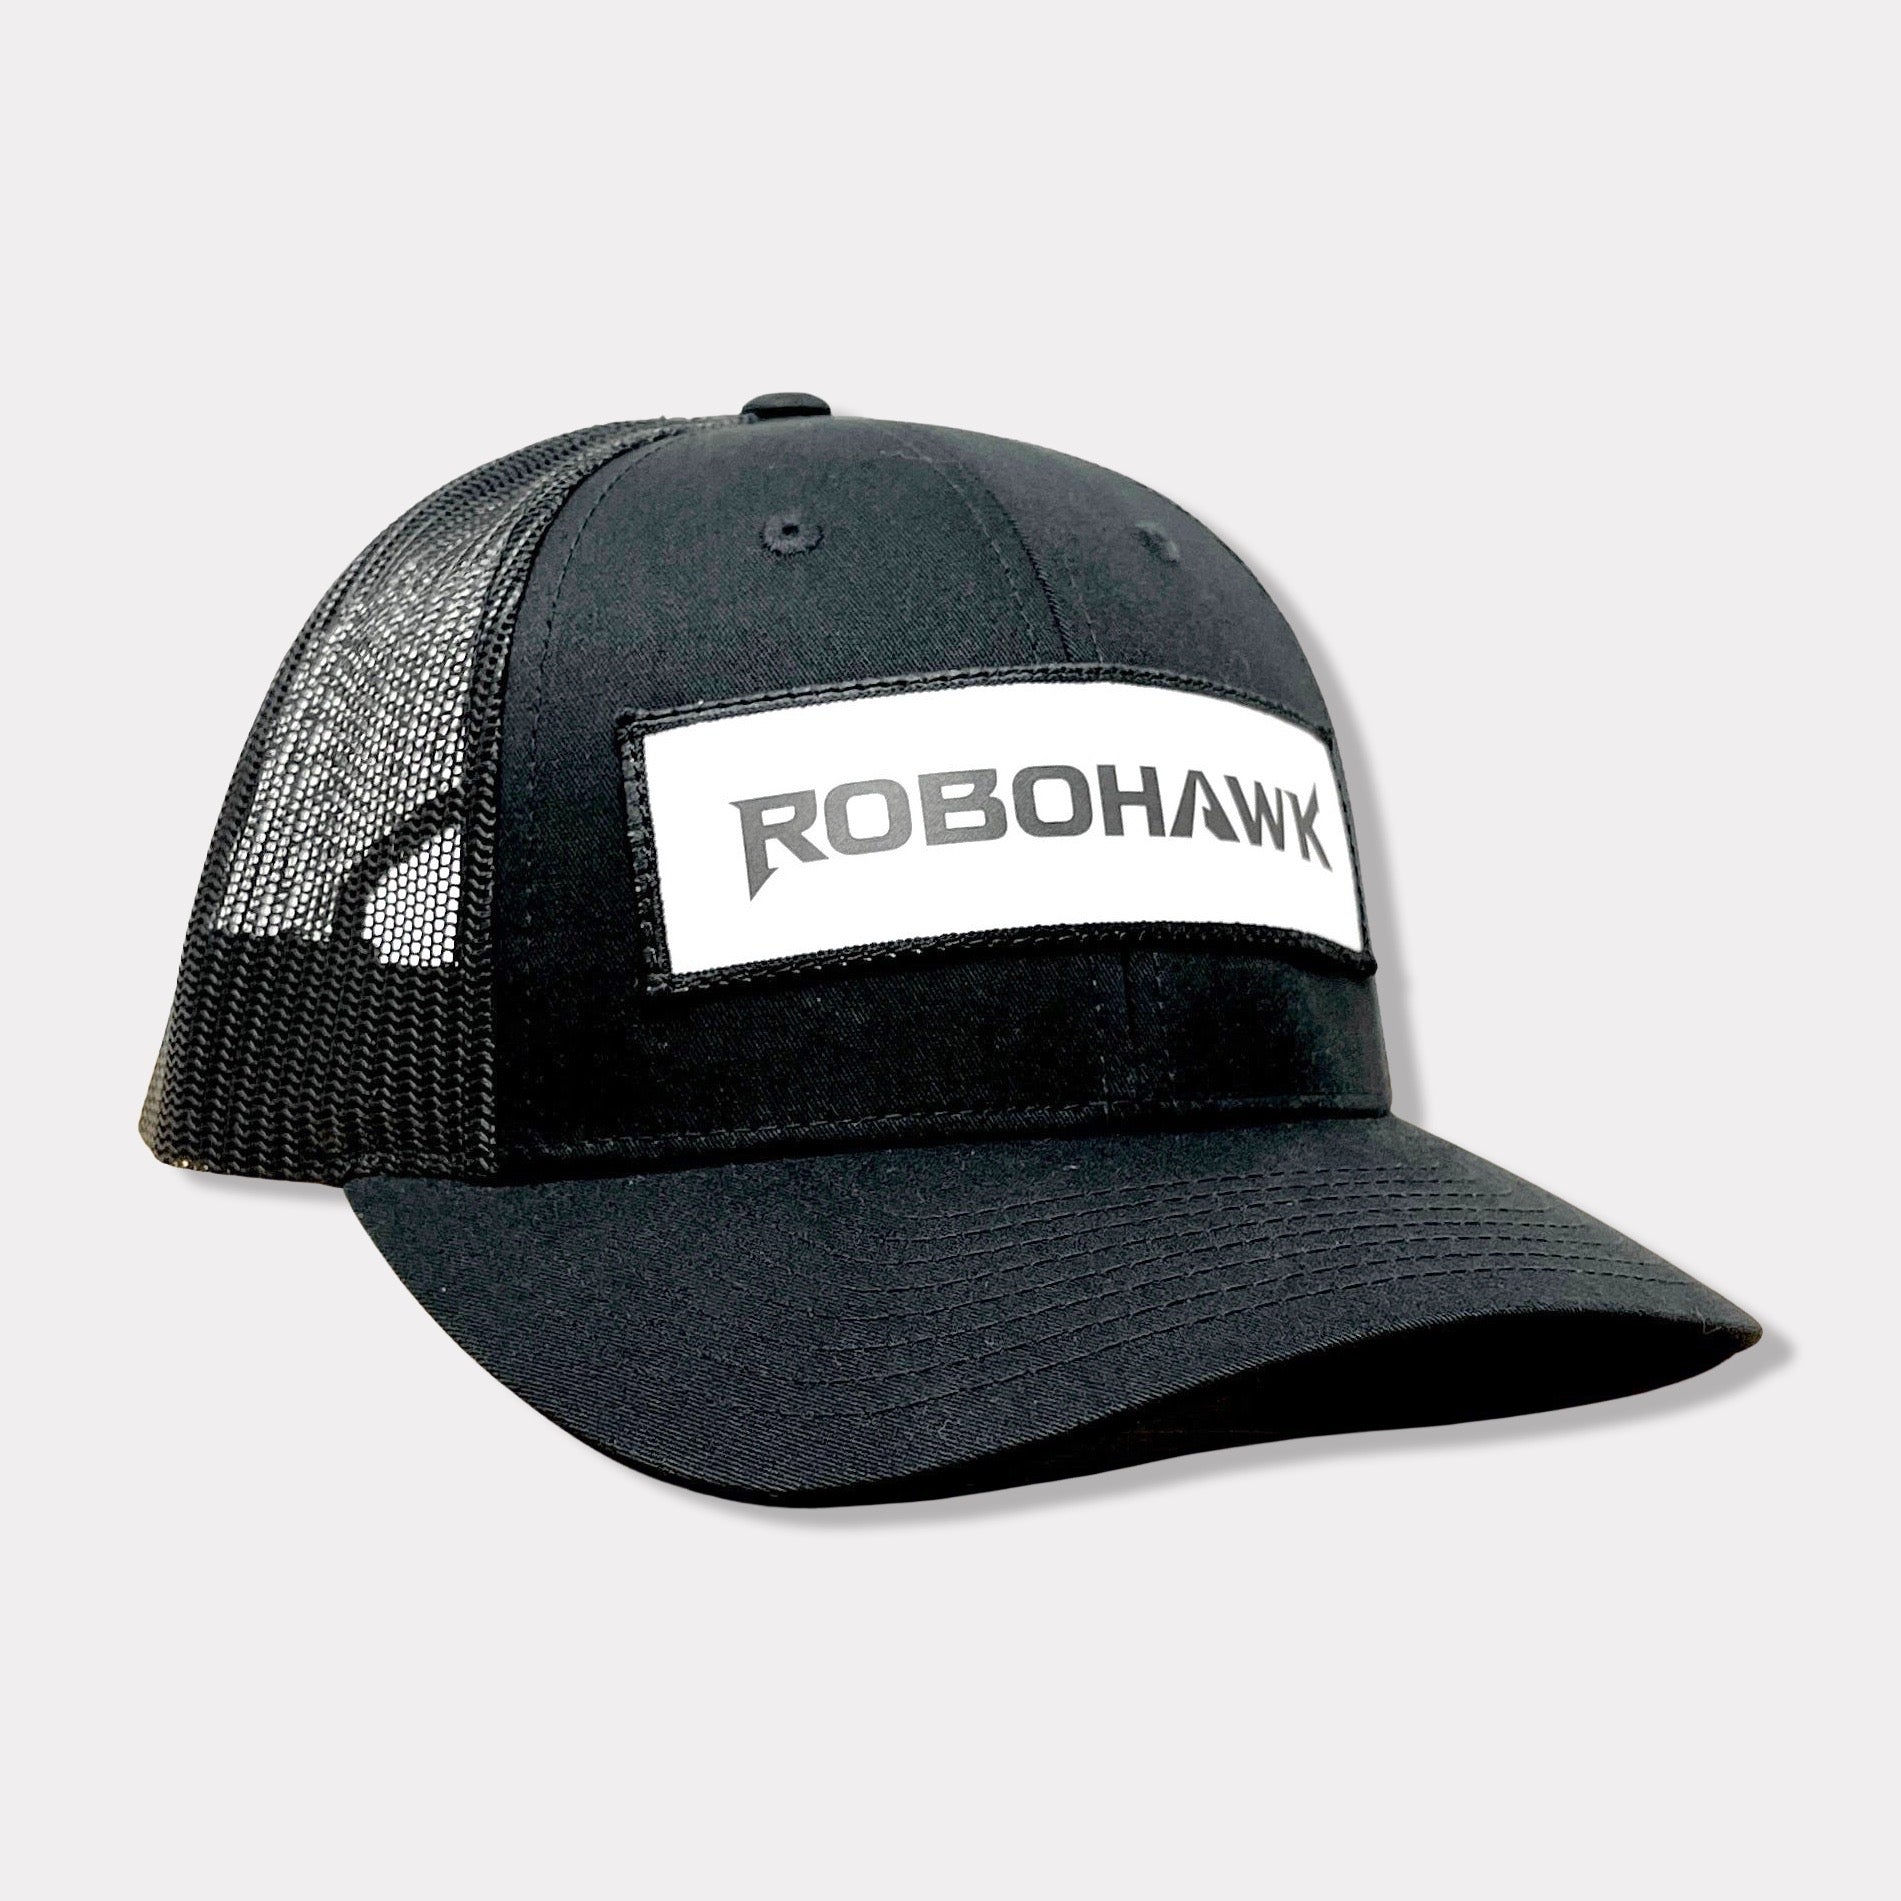 ROBOHAWK BLACK HAT WITH WHITE PATCH - Robohawk